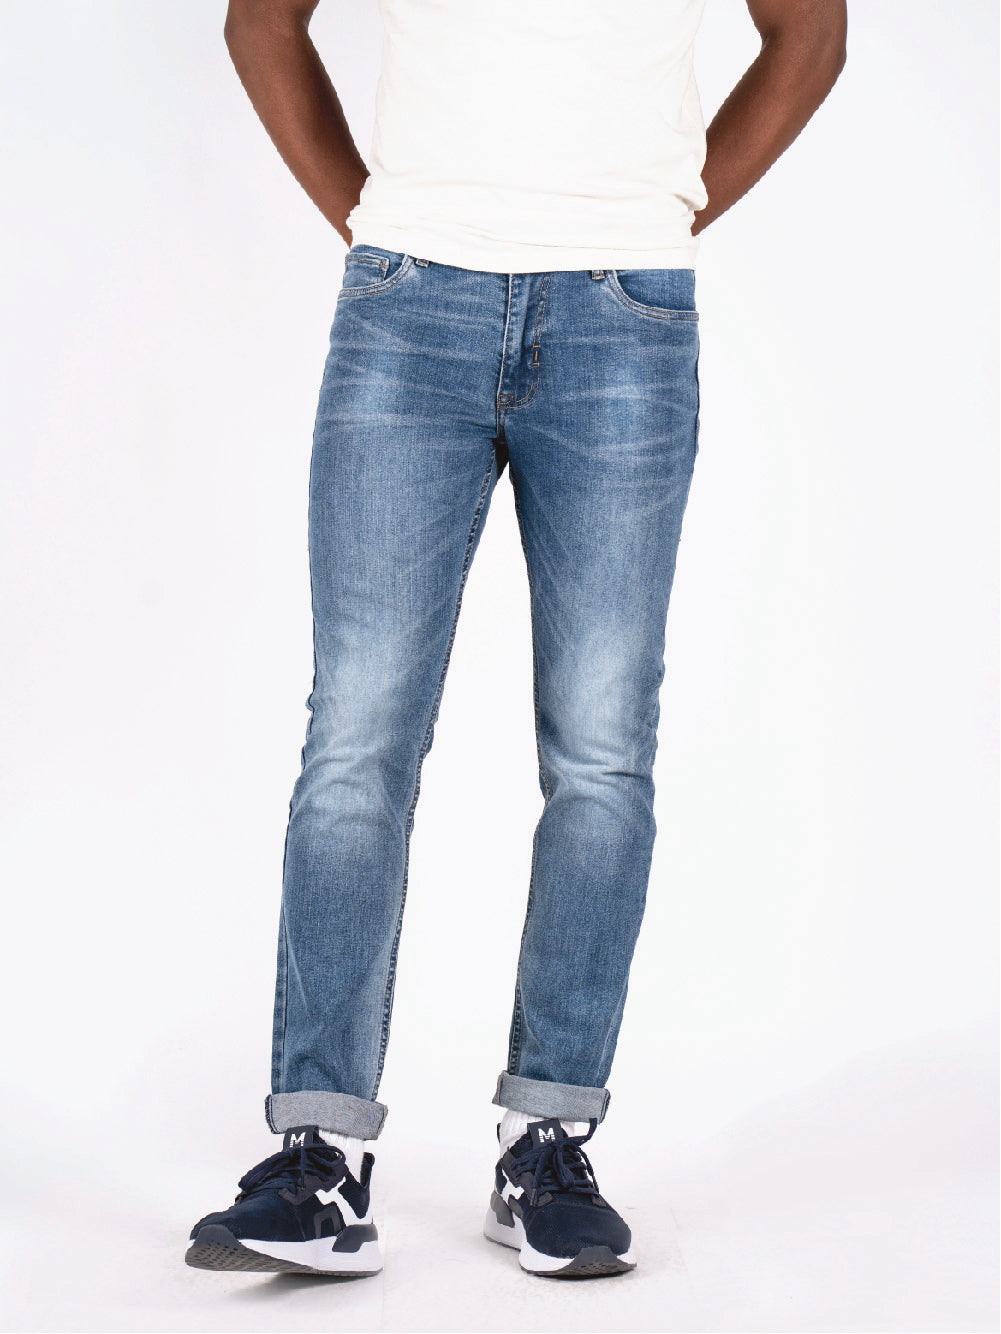 Cutler Flex Jeans Slim Fit 2170 - Light Denim Blue